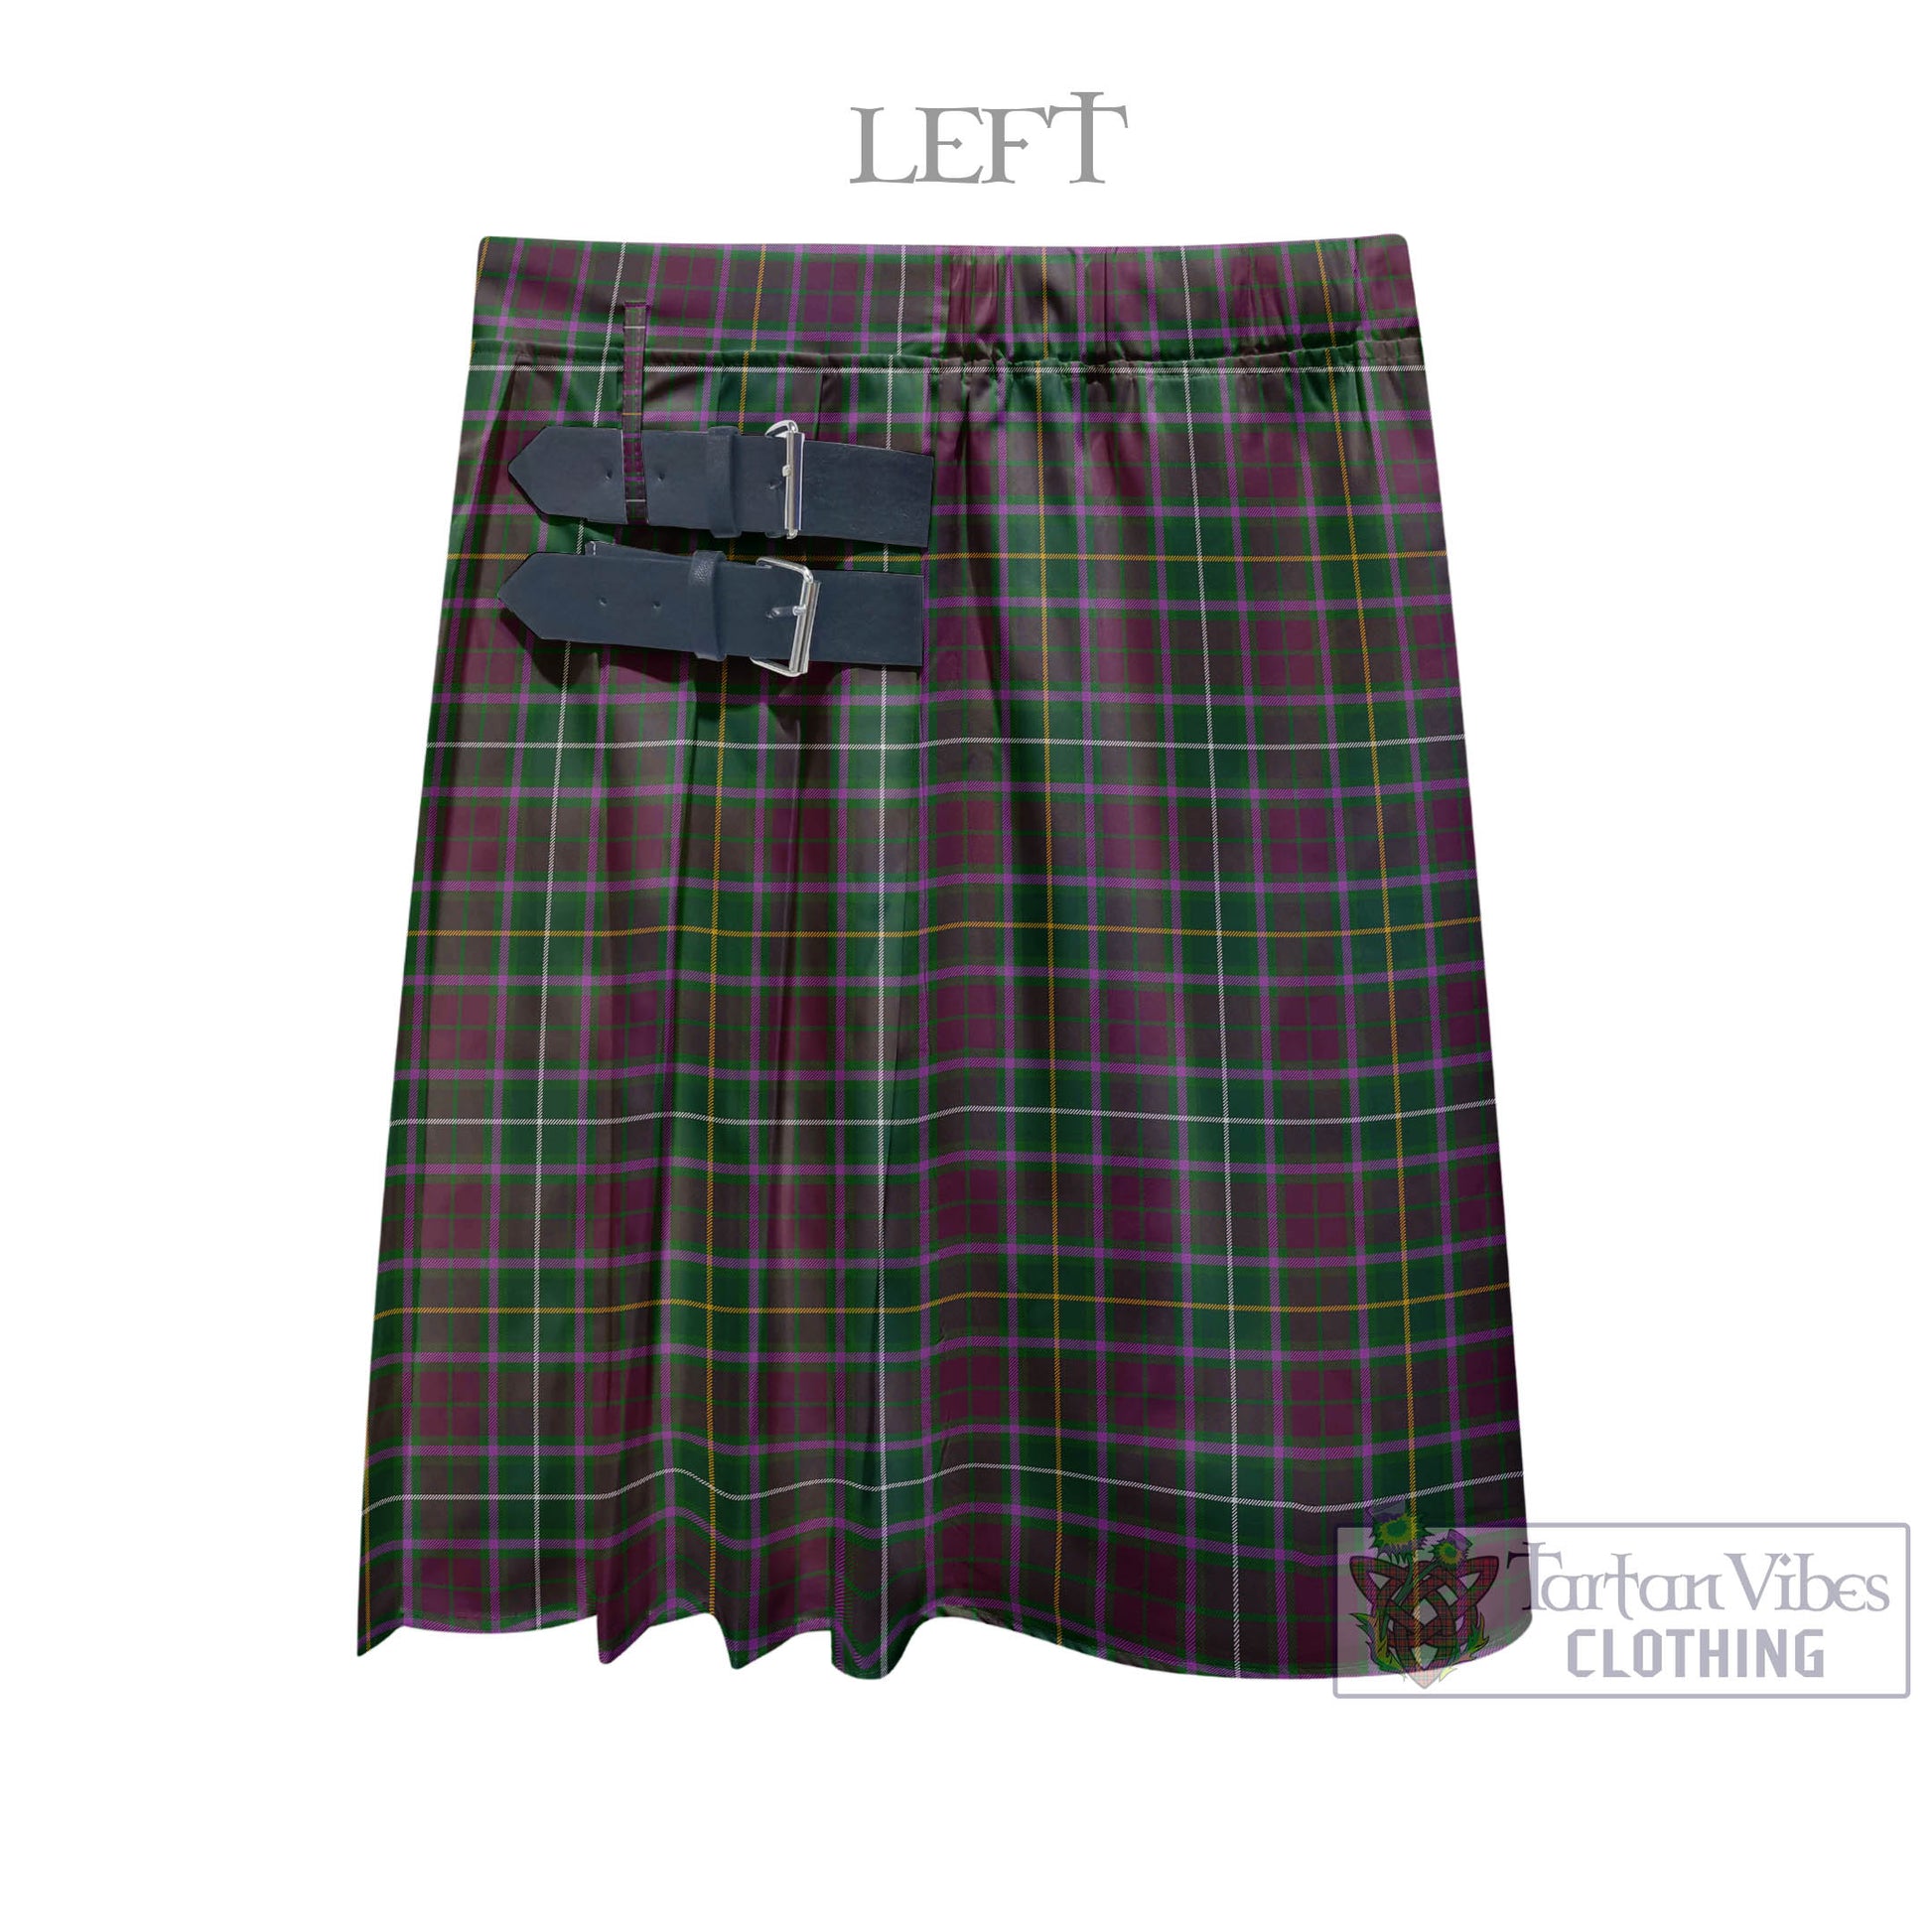 Tartan Vibes Clothing Crosbie Tartan Men's Pleated Skirt - Fashion Casual Retro Scottish Style